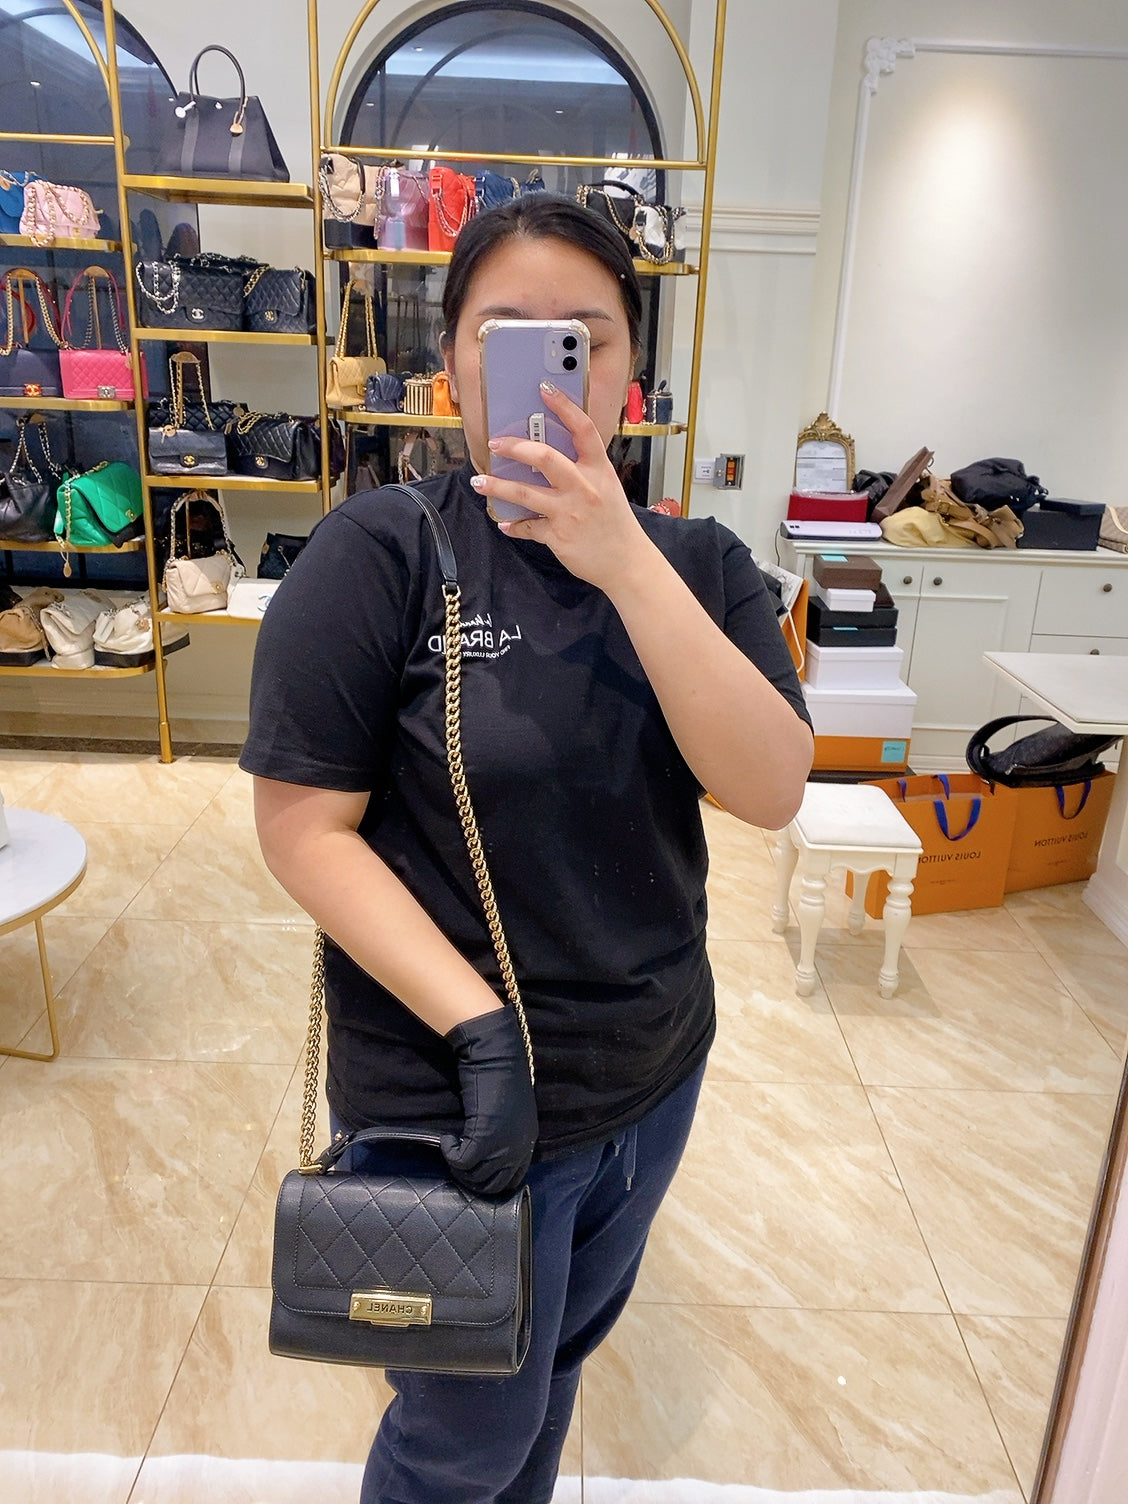 Chanel Label Click Bag